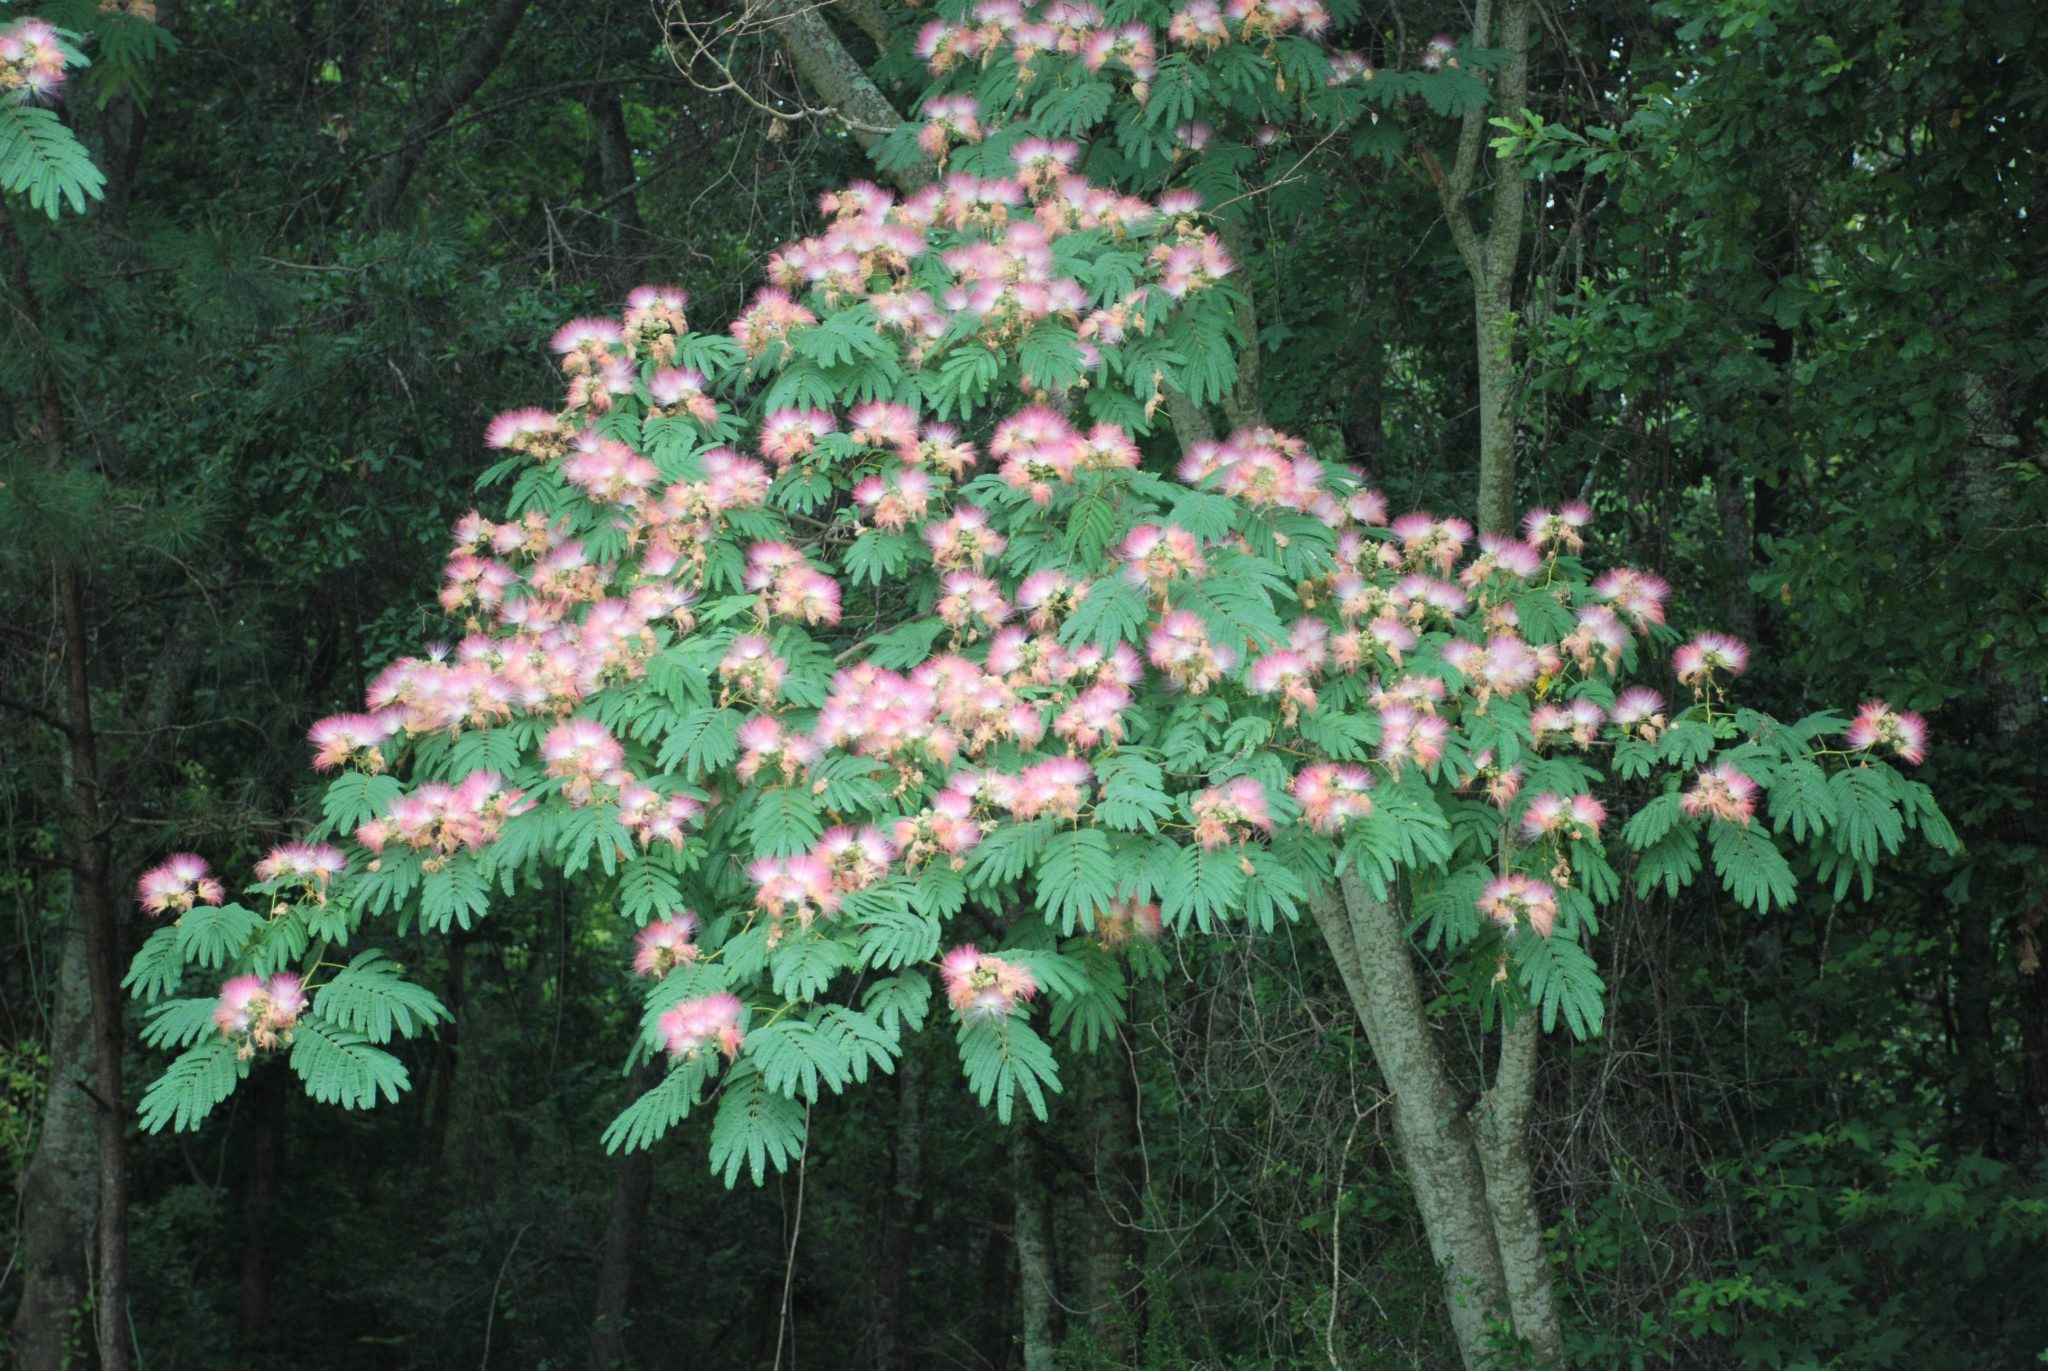 The Mimosa Tree: Beautiful But Invasive – Alabama Cooperative